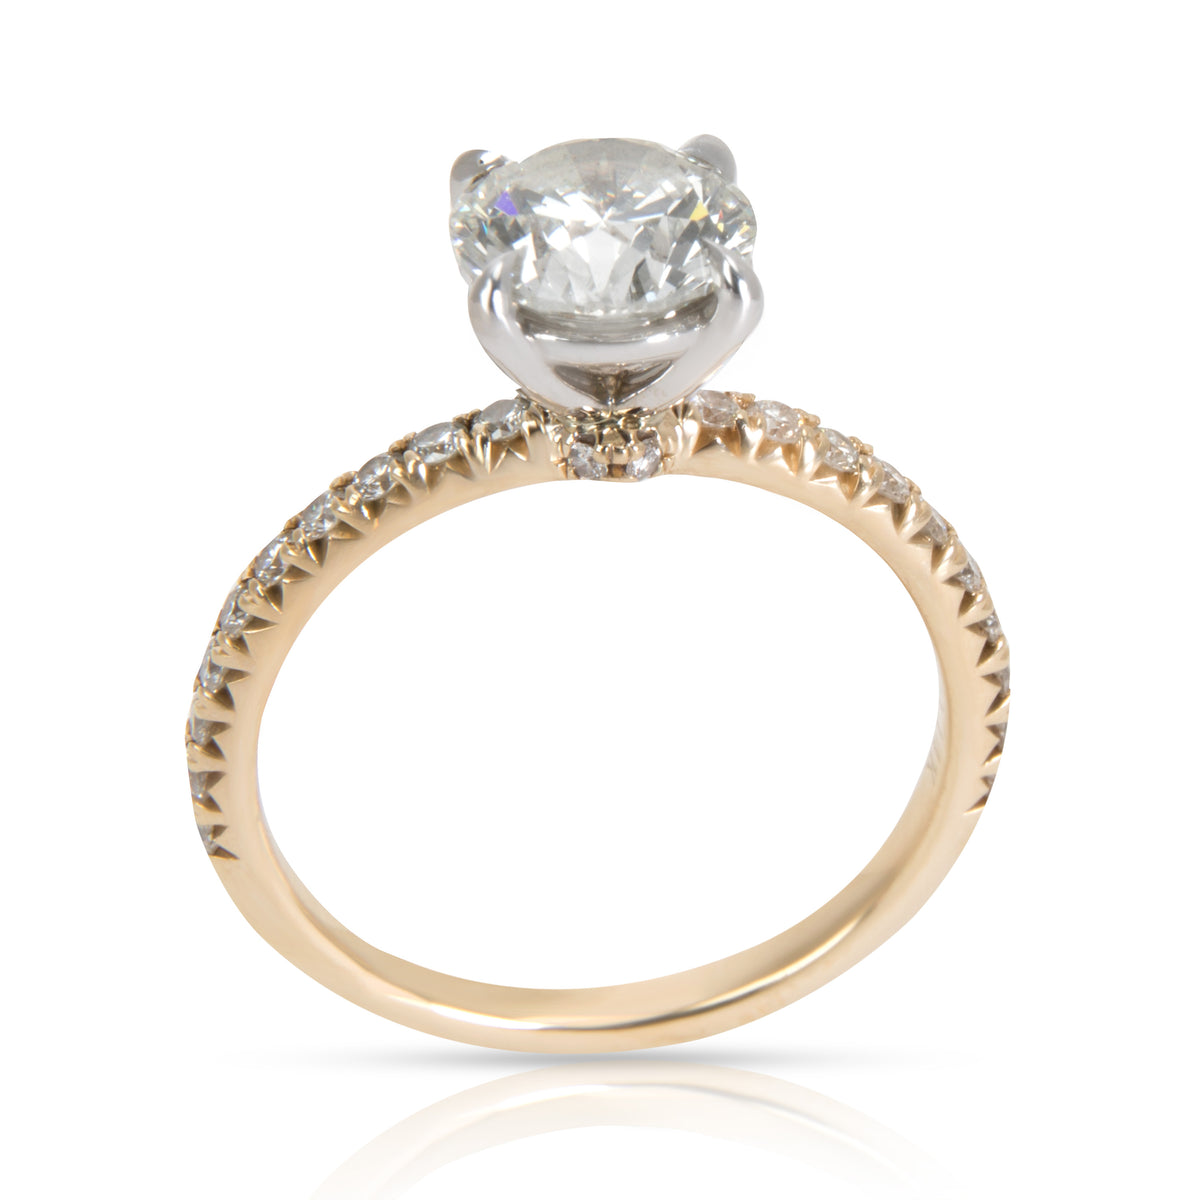 James Allen French Cut Diamond Engagement Ring in 14KT Gold K VVS2 1.22 CTW